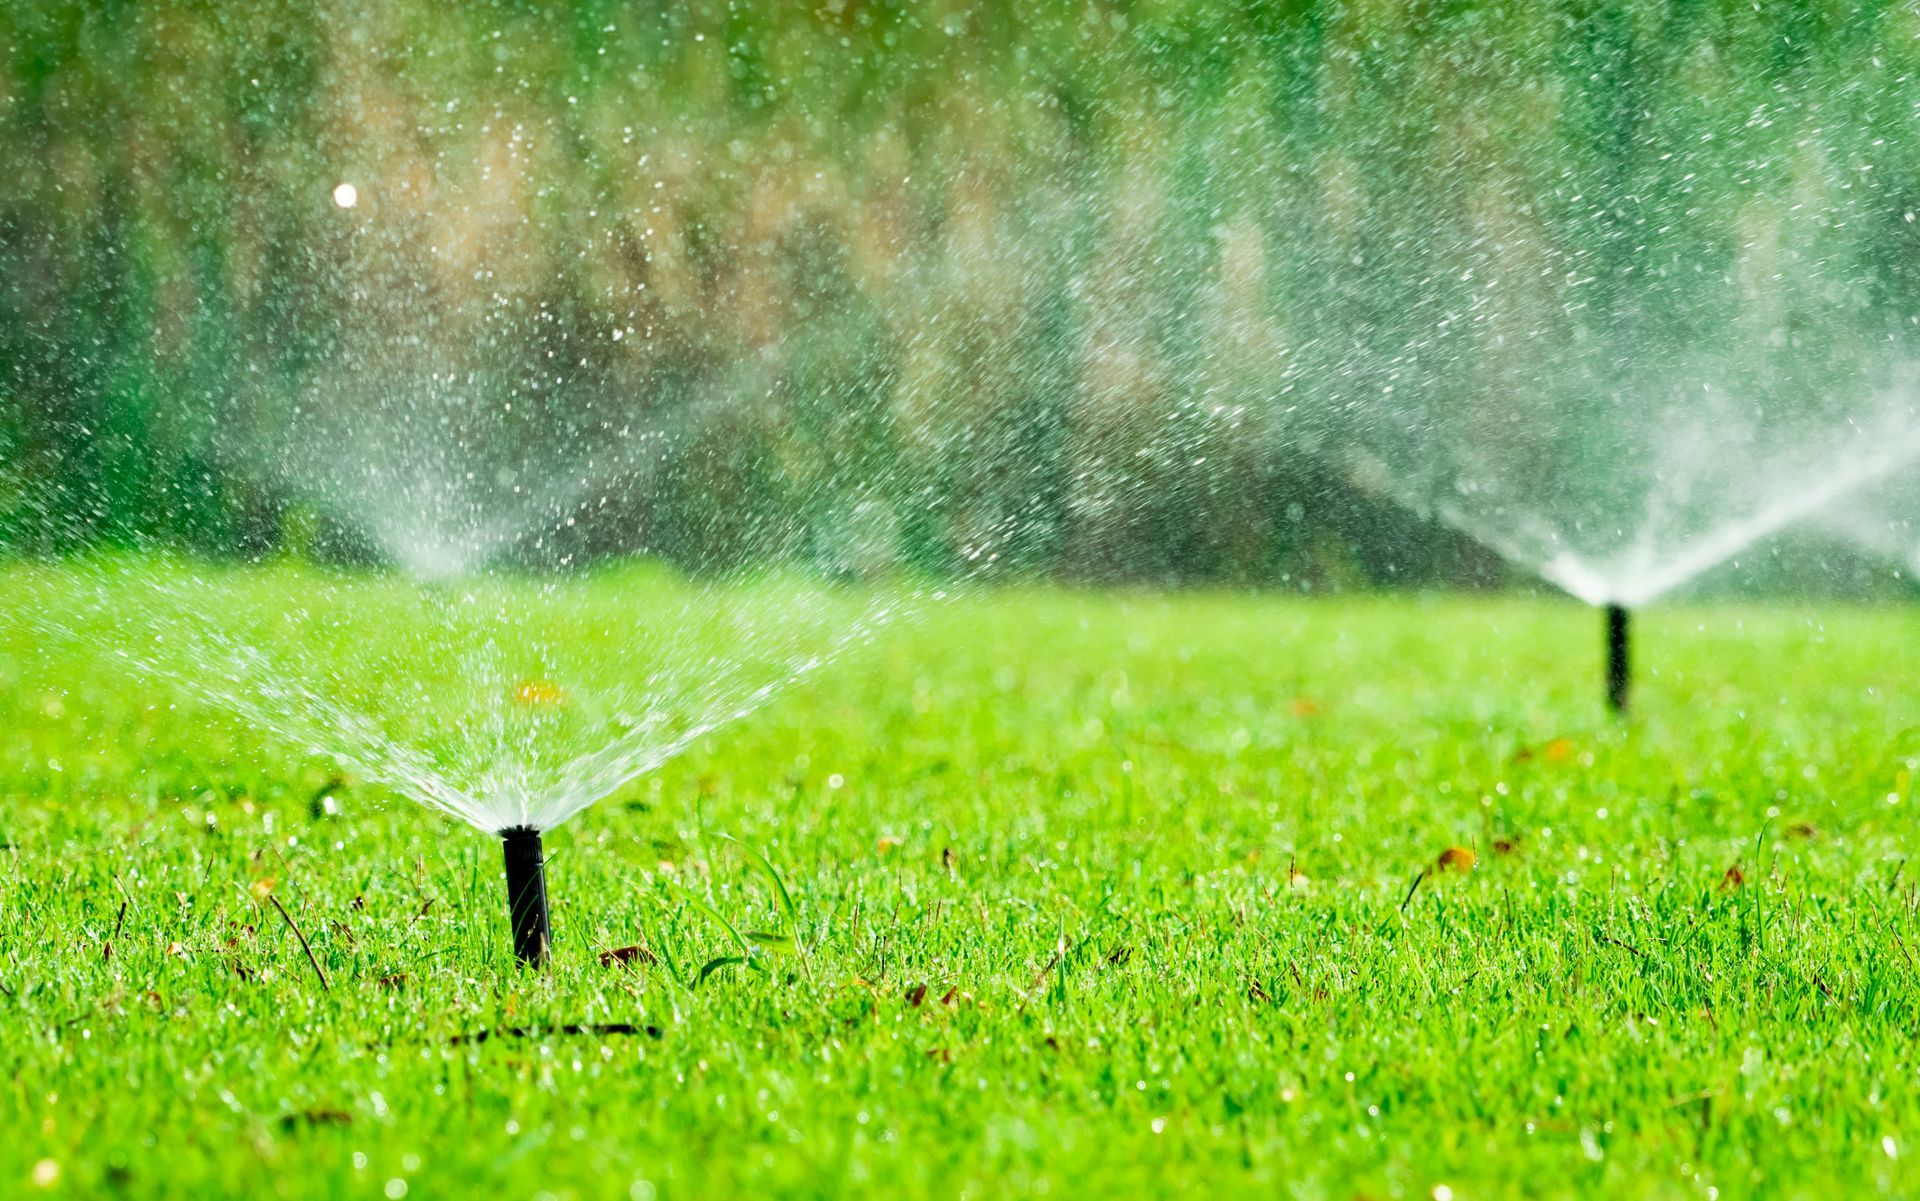 Backyard sprinkler  system in Bend, Oregon.